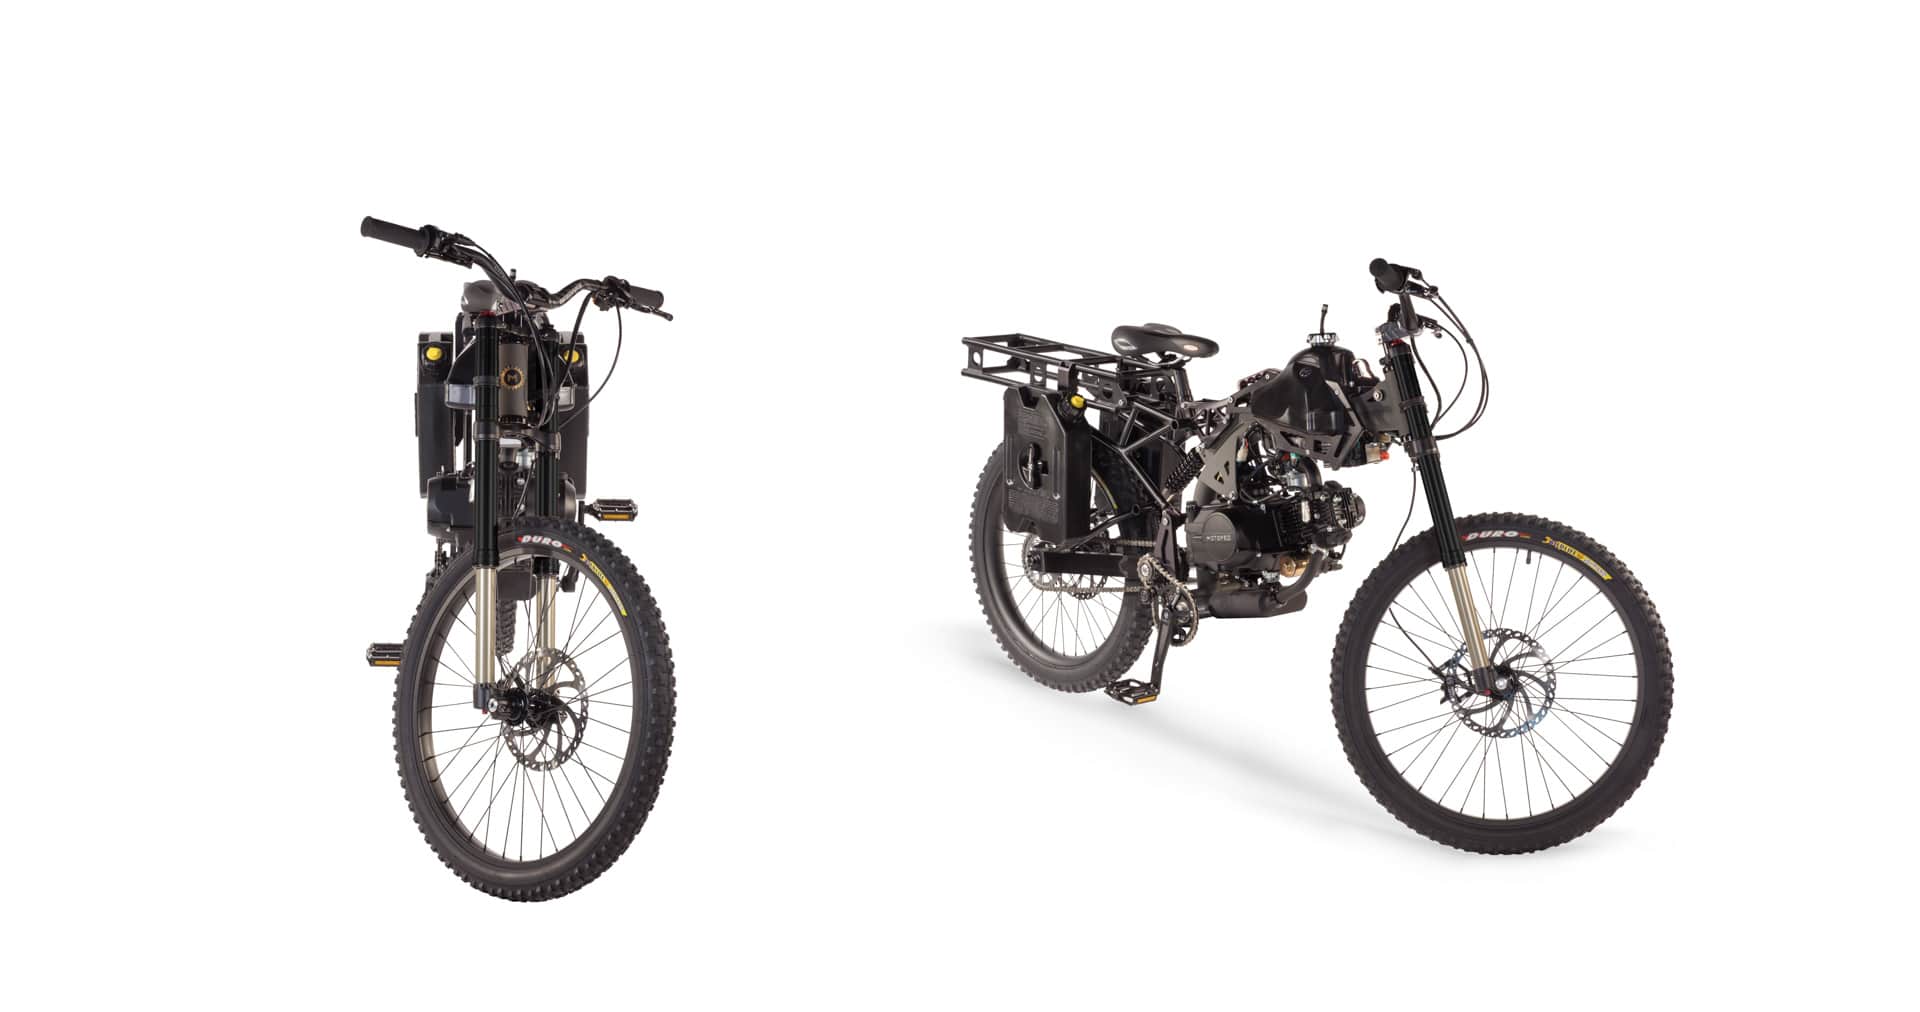 Motoped-Survival-bike